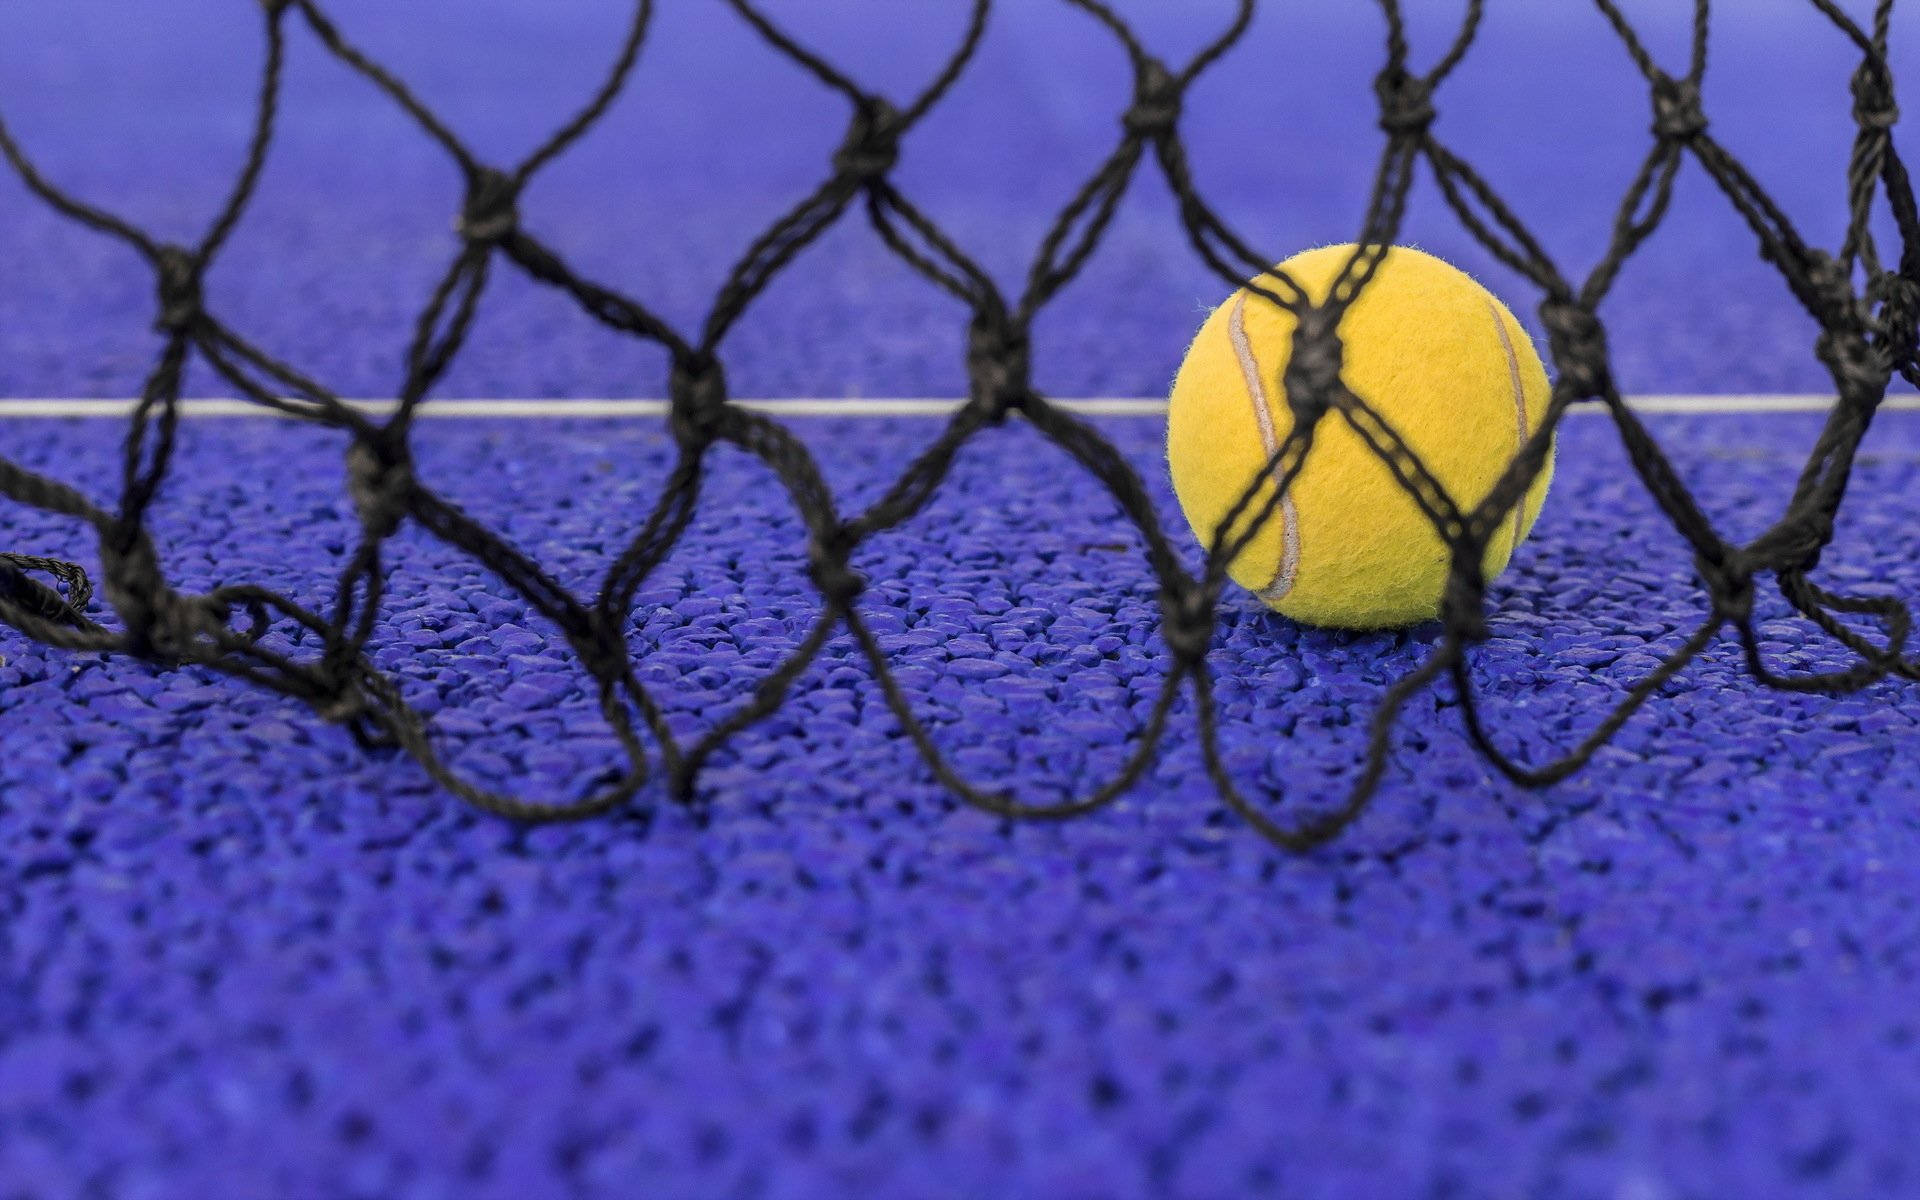 Intense Moment Of A Tennis Match Background